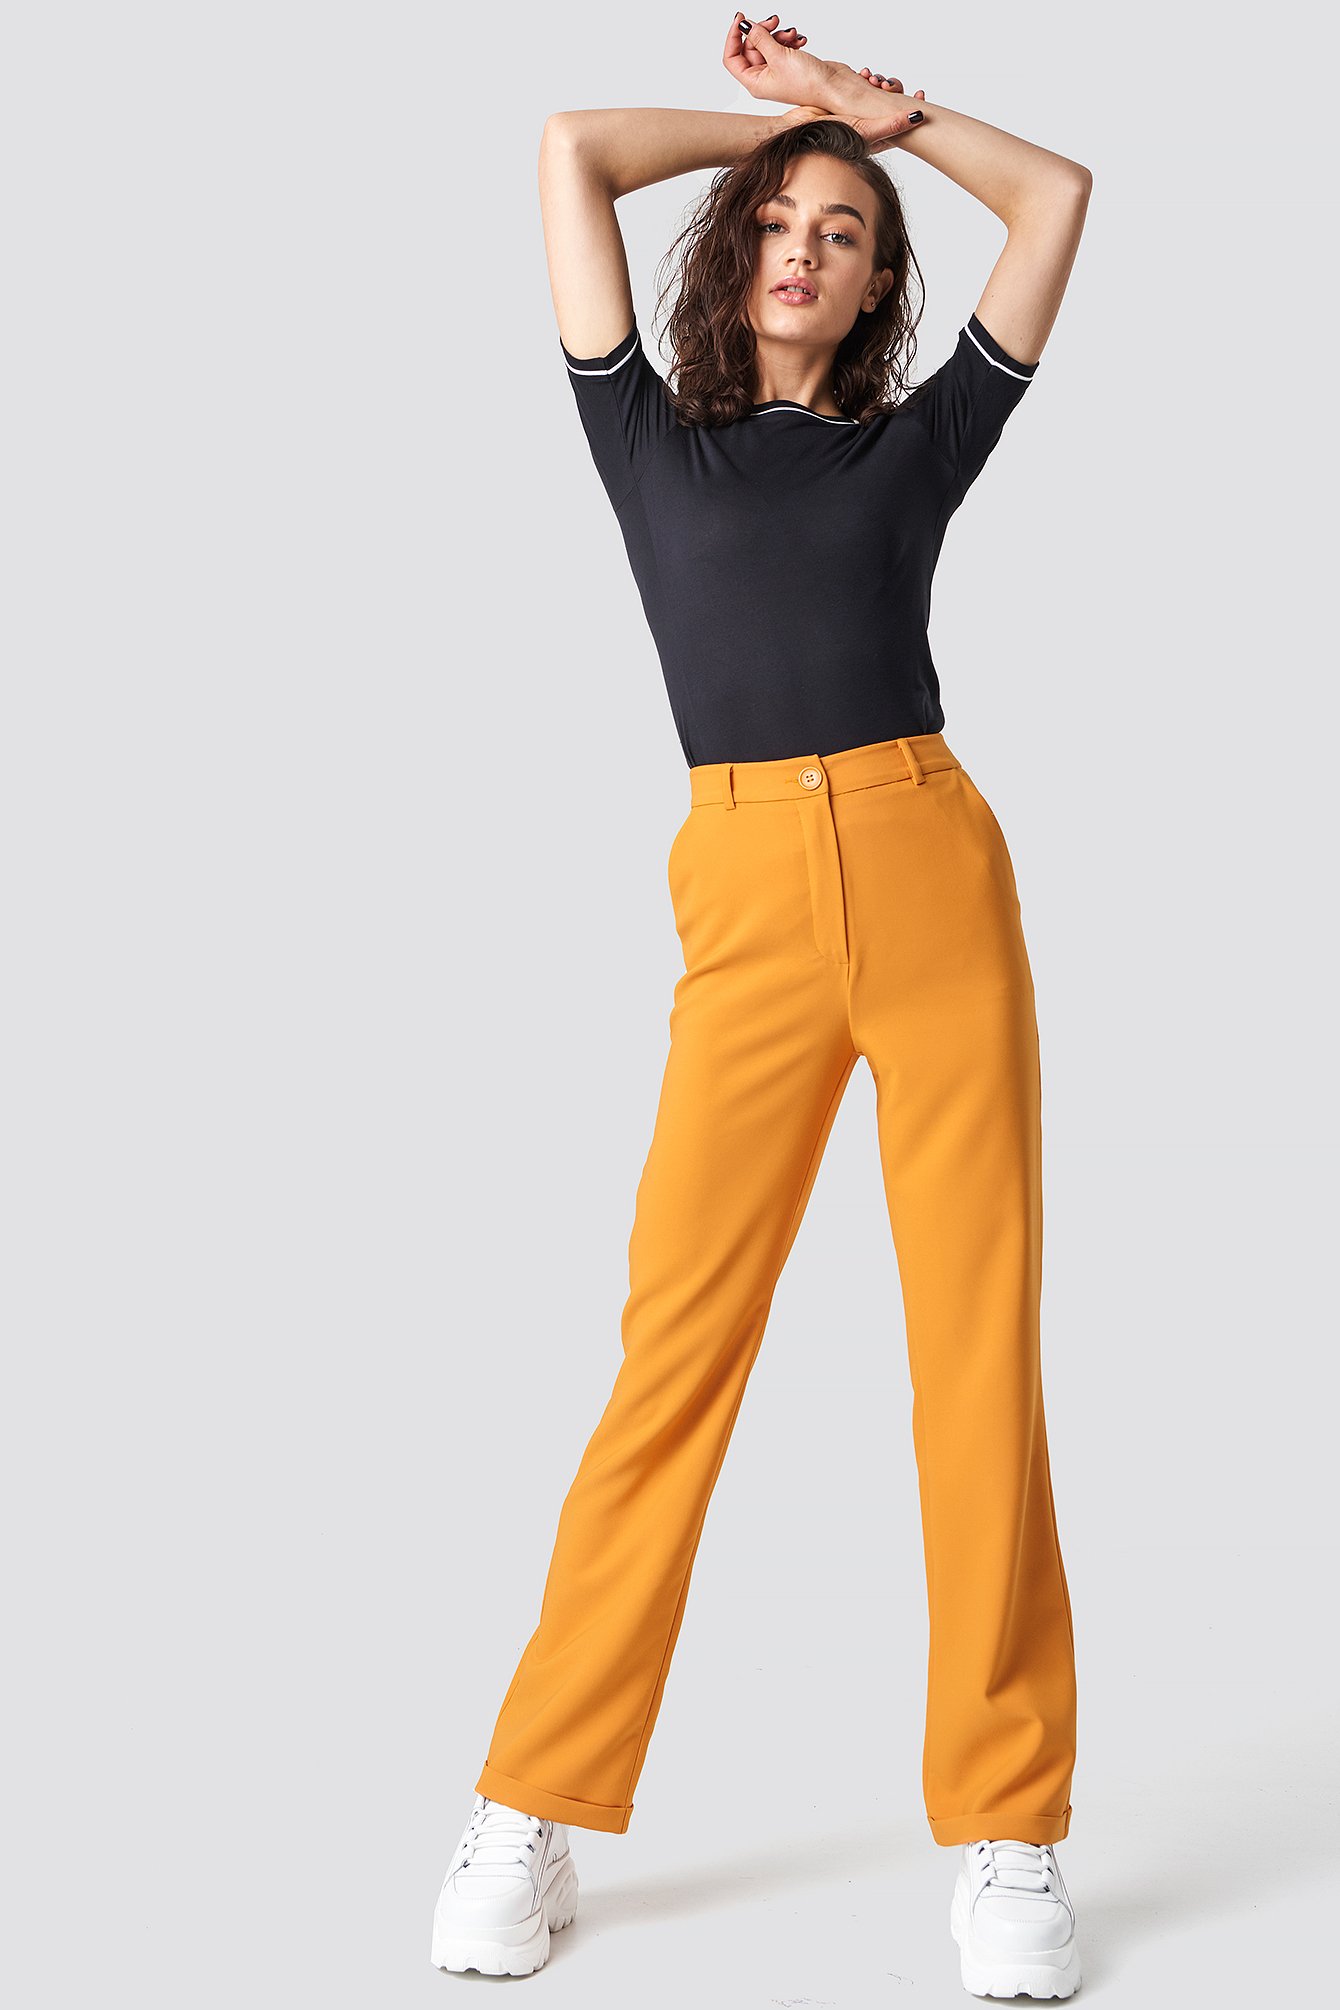 Astrid Olsen X Na-kd  Folded Suit Pants - Orange